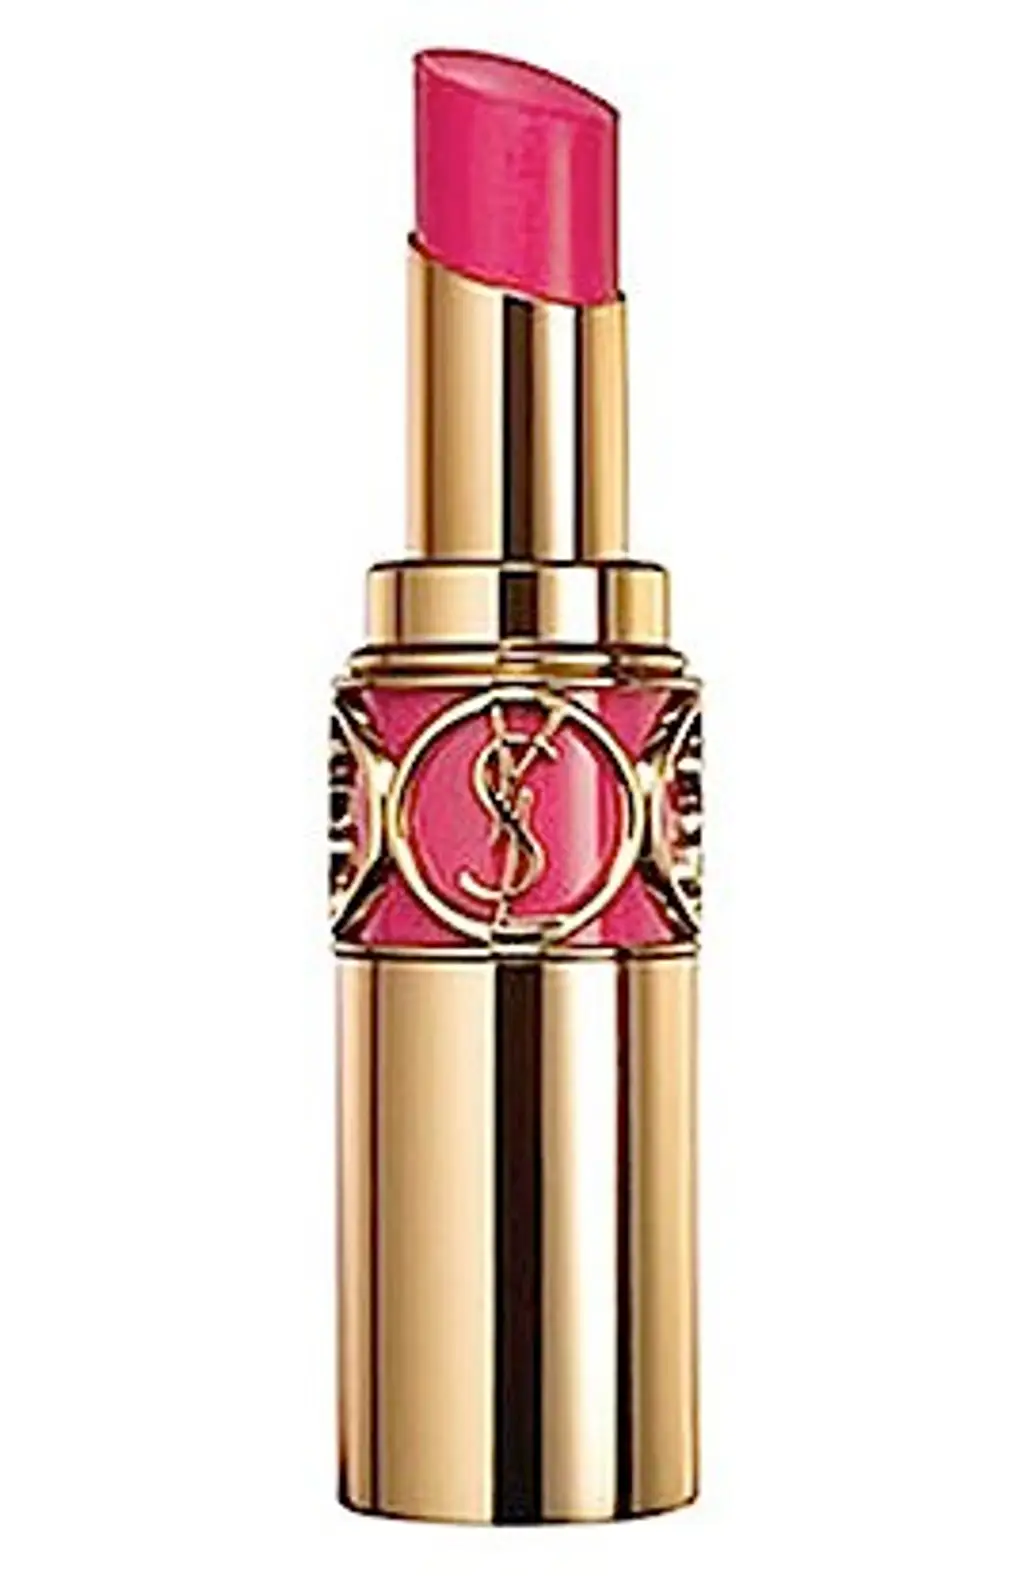 YSL Rouge Volupte Silky Sensual Radiant Lipstick SPF 15 - #13